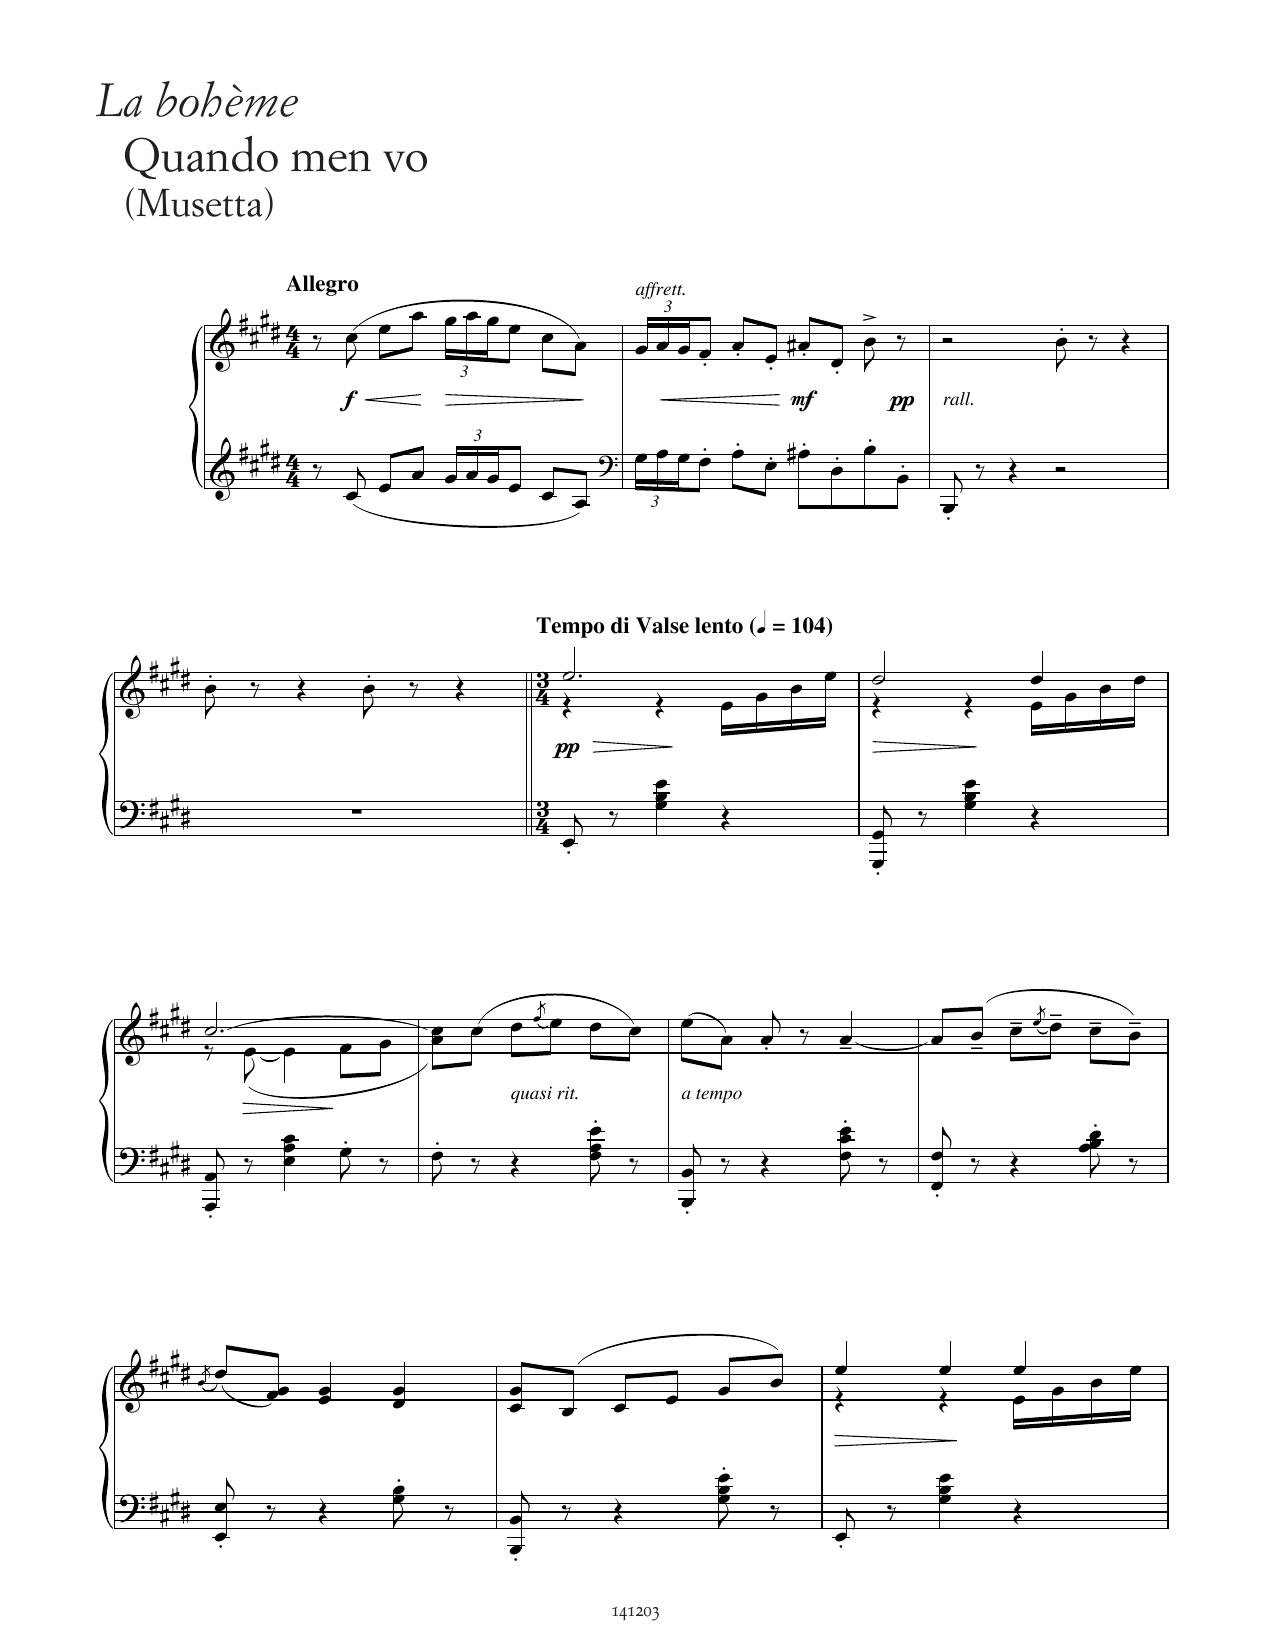 Giacomo Puccini Quando men vo (from La Bohème) Sheet Music Notes & Chords for Piano Solo - Download or Print PDF